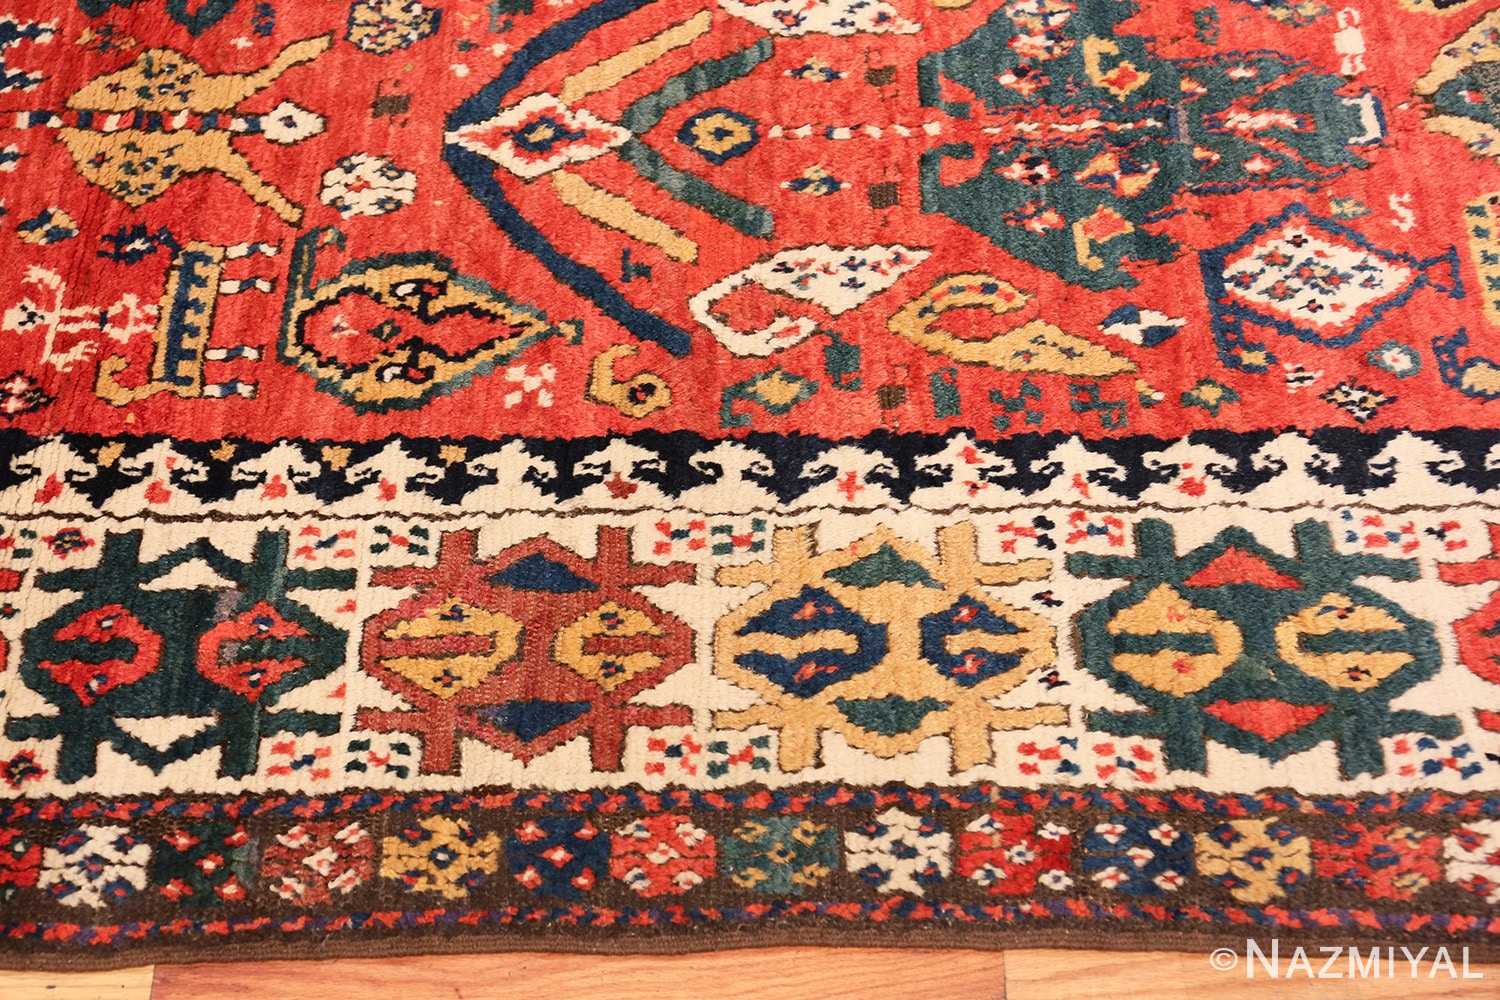 Border Antique Kazak Caucasian rug 70122 by Nazmiyal